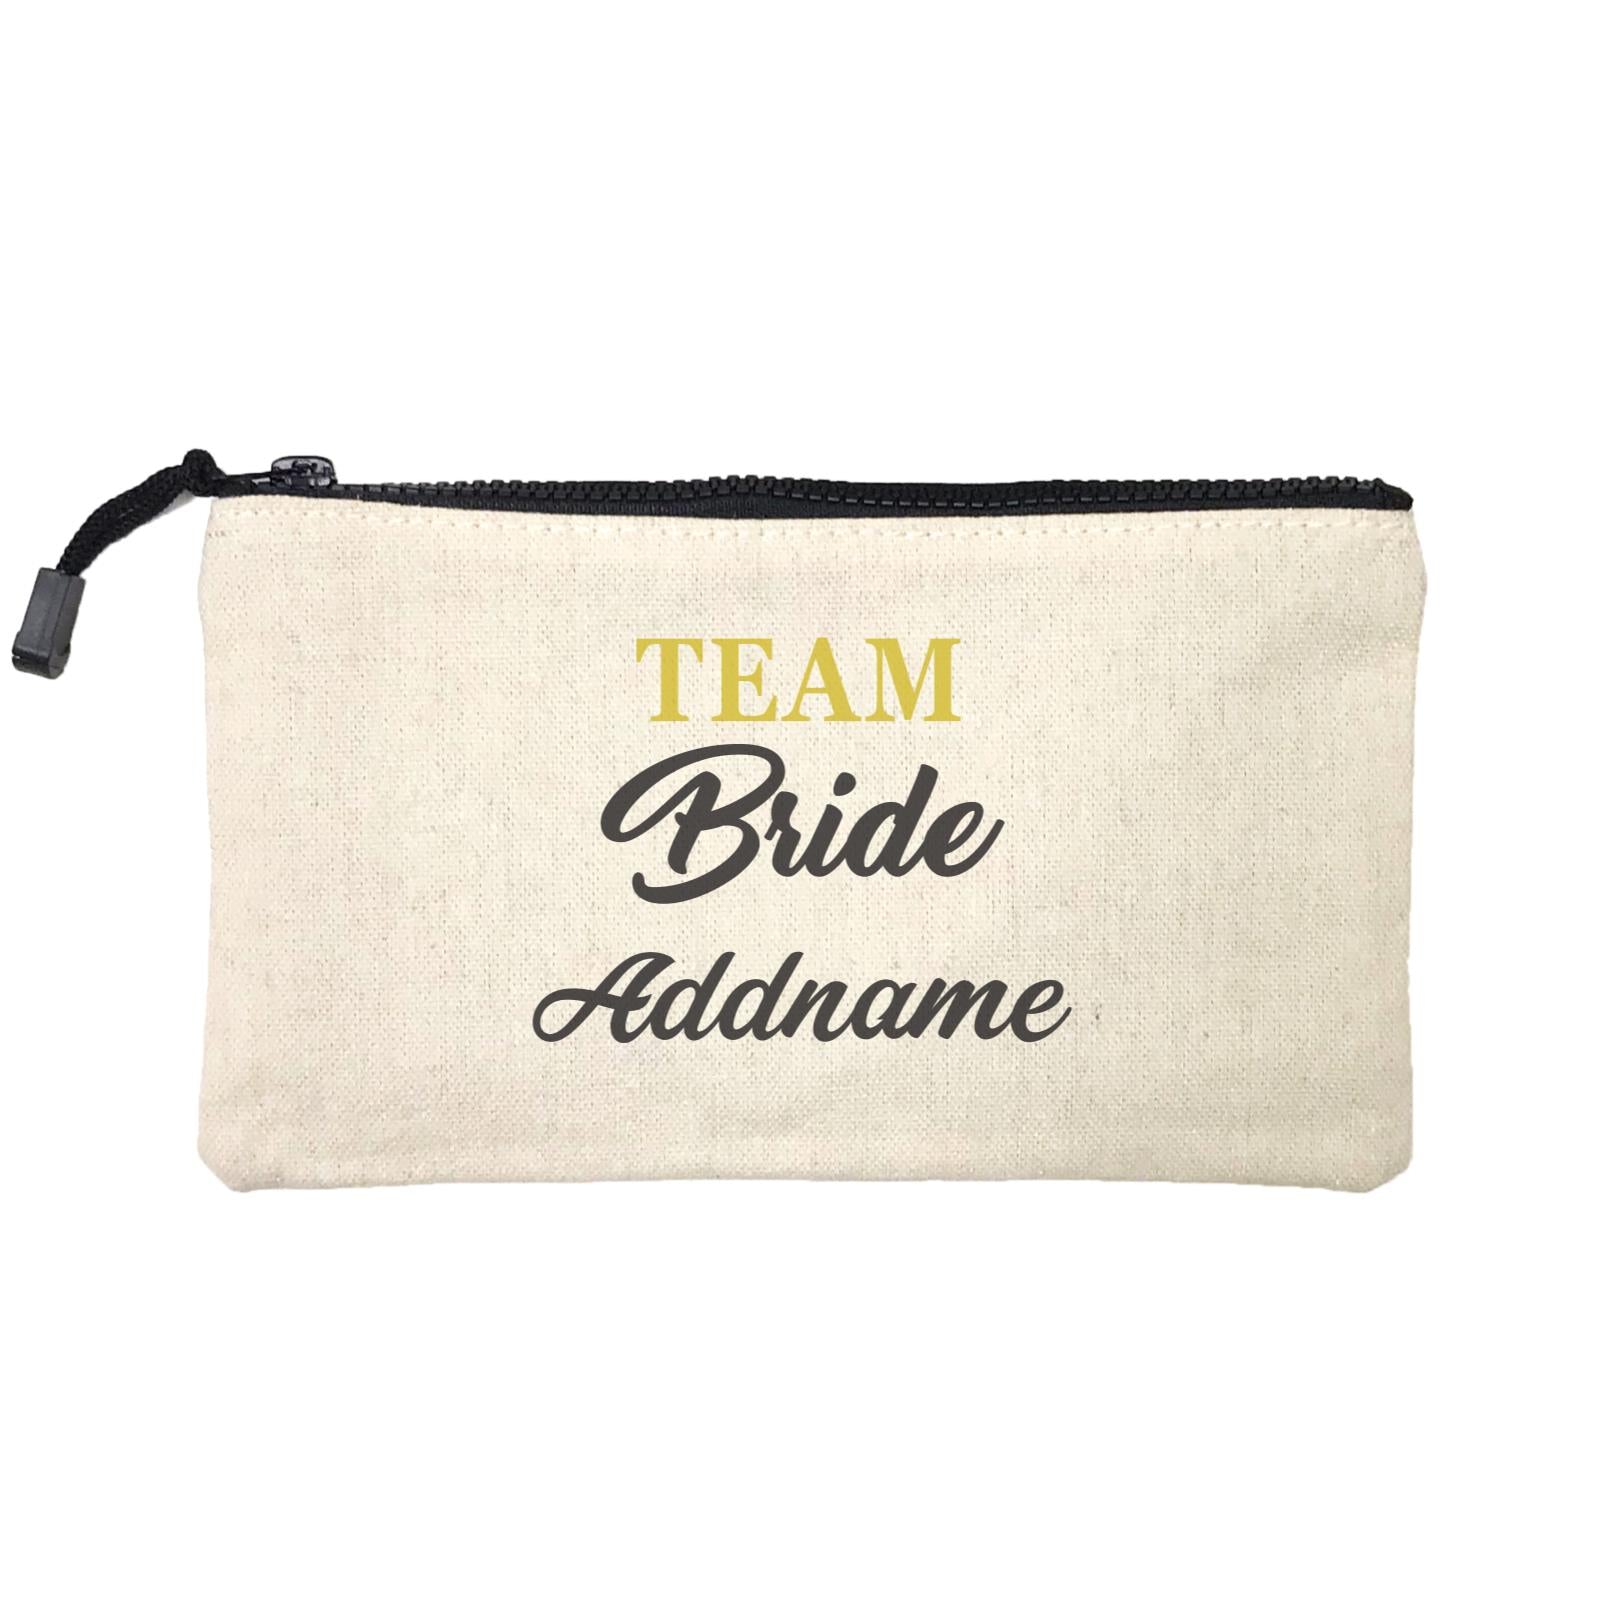 Bridesmaid Team Team Bride Addname Mini Accessories Stationery Pouch